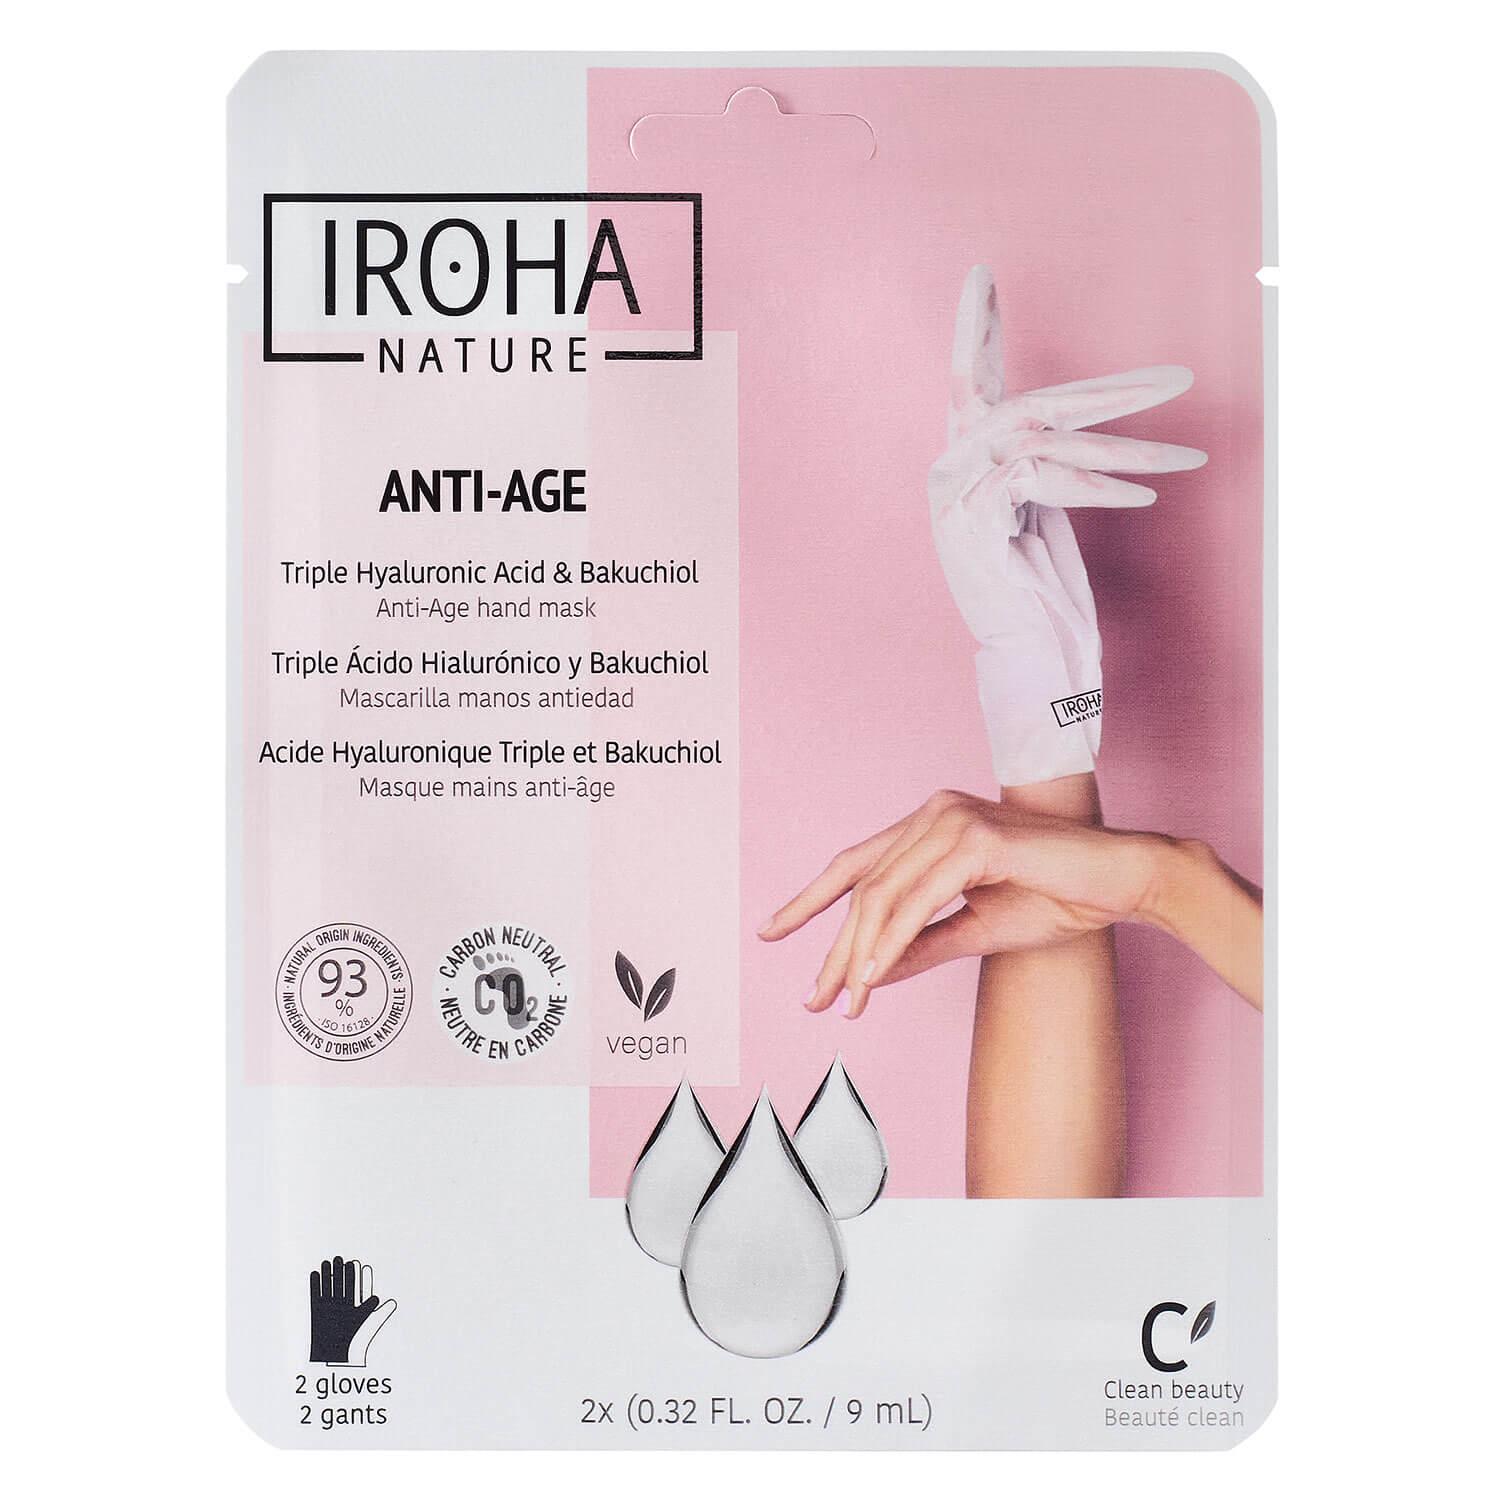 Iroha Nature - Anti-Age Triple Hyaluronic Acid & Bakuchiol Hand Mask